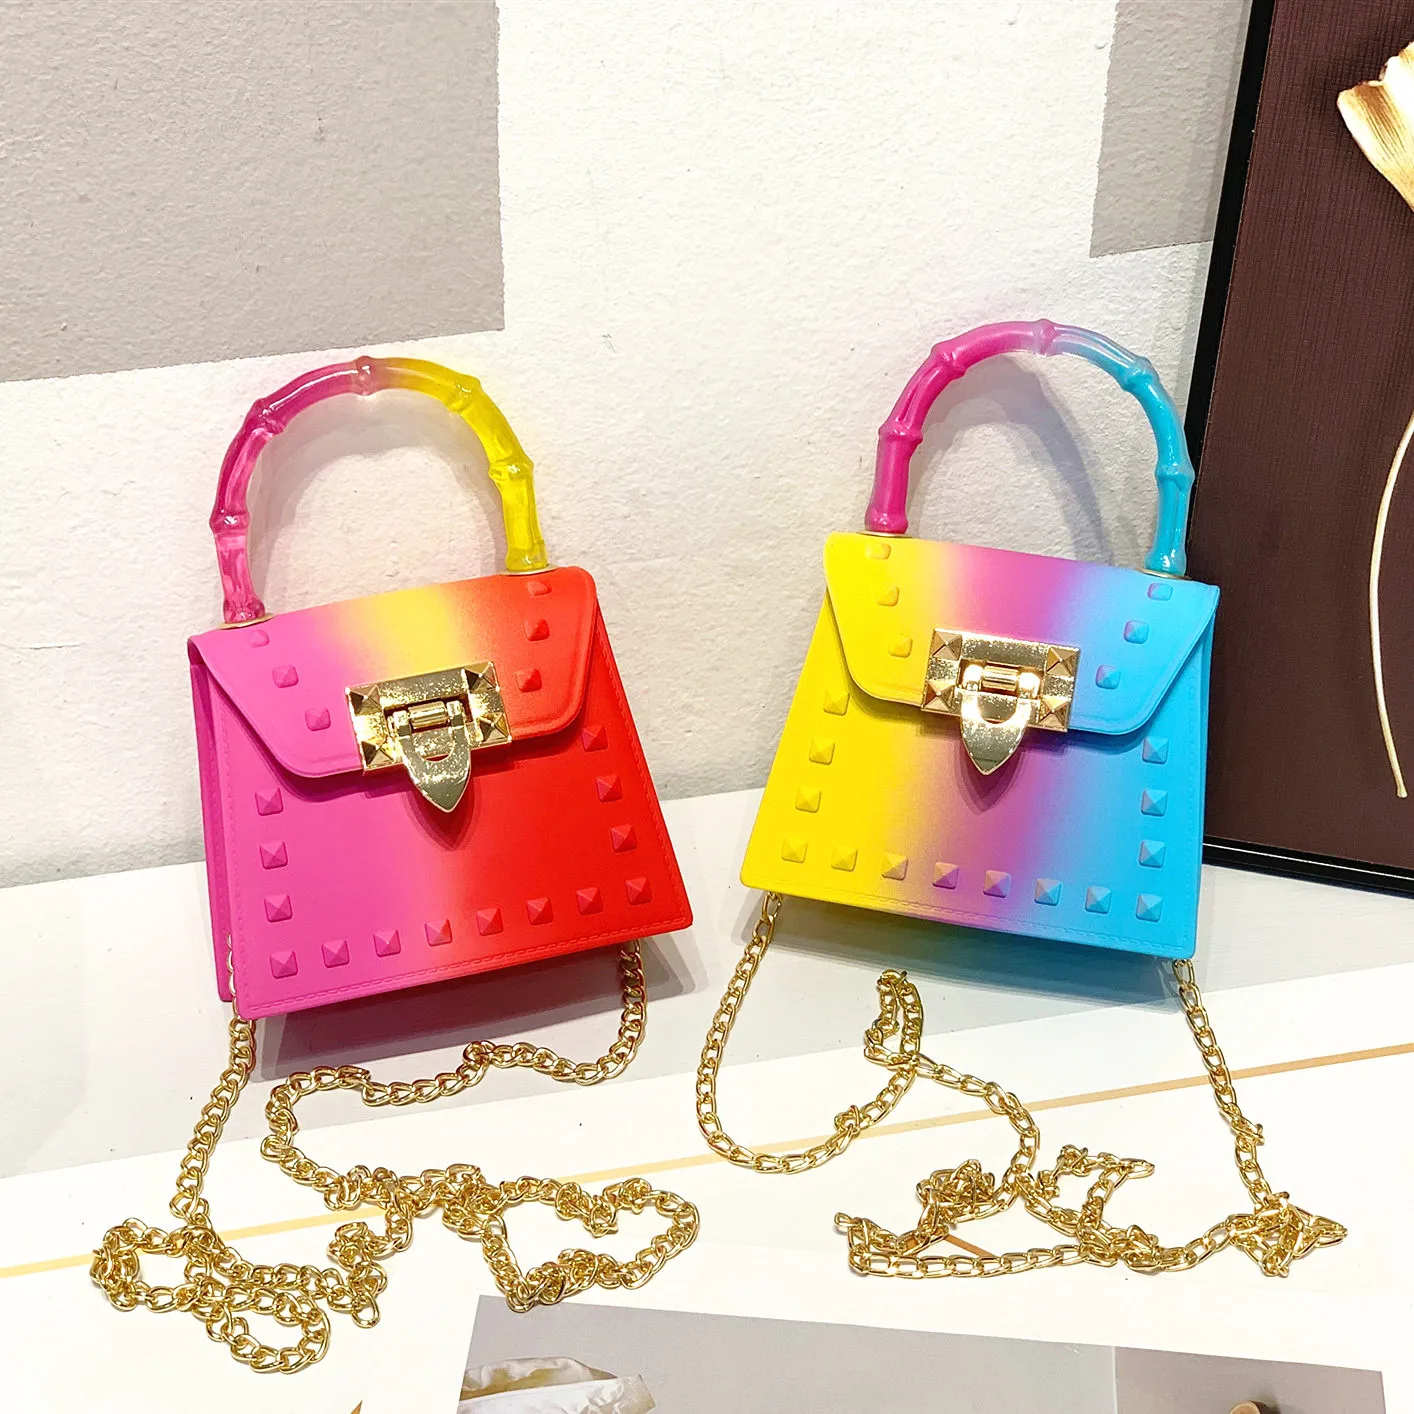 

Factory Small jelly fancy handbags for women retro jelly bag coin purse wallet girls PVC rainbow handbags Kid